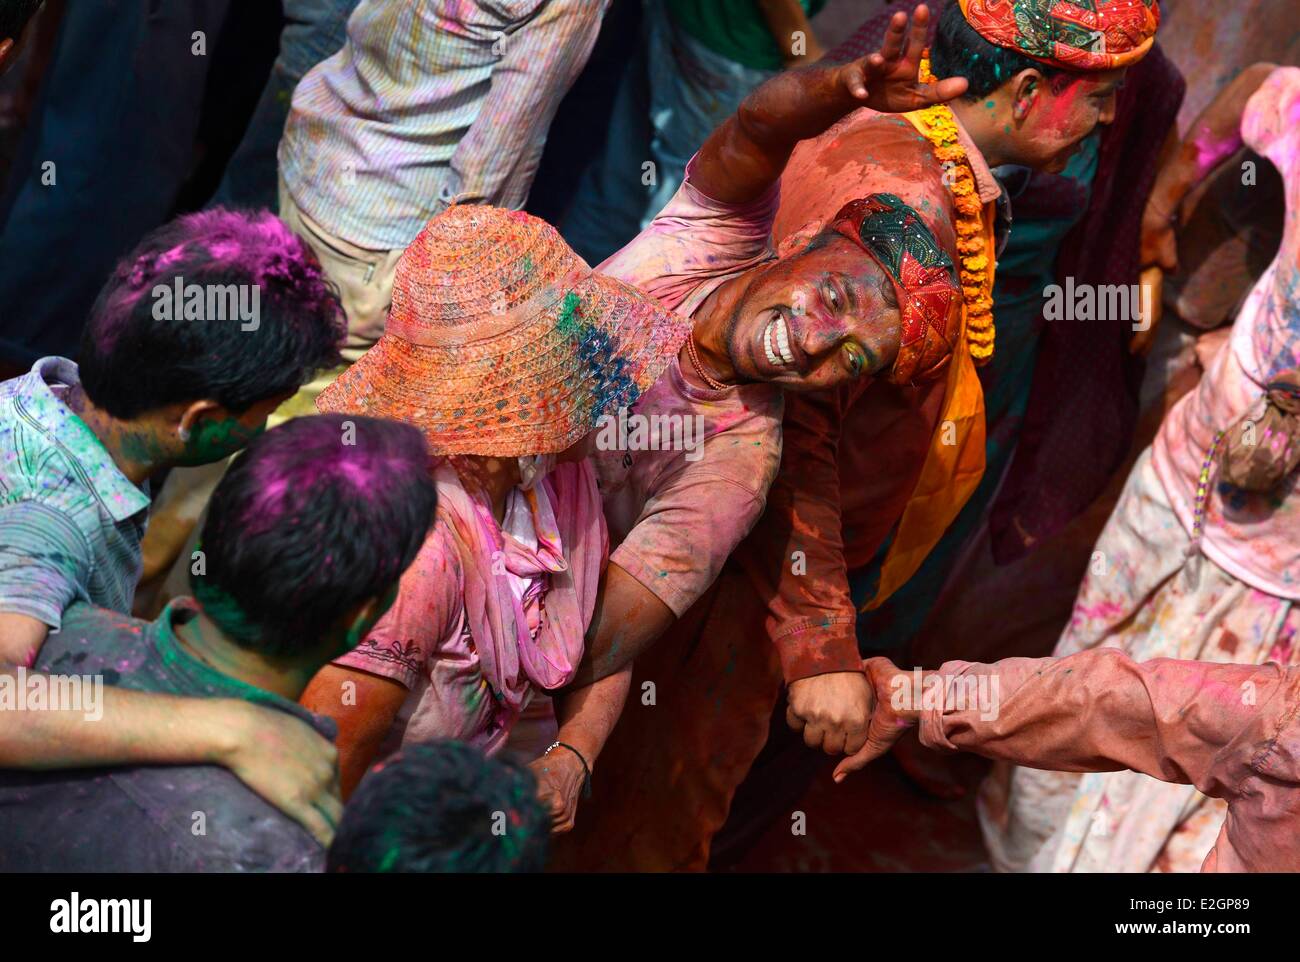 India Uttar Pradesh State in Barsana temple people receive coloured powder during Holi festival celebrations Stock Photo